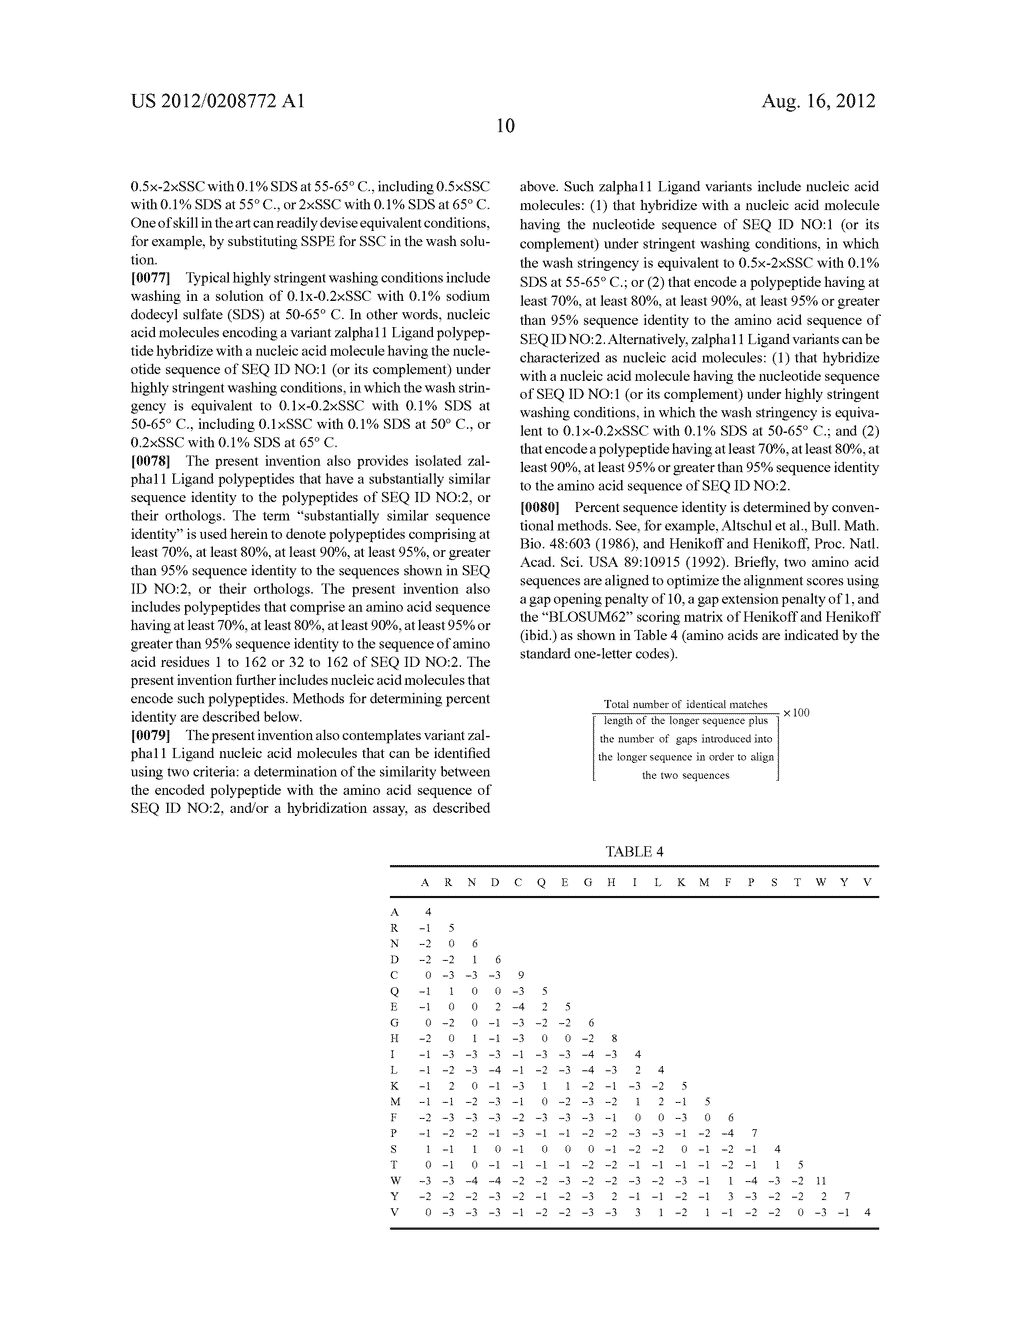 CYTOKINE ZALPHA11 LIGAND - diagram, schematic, and image 16